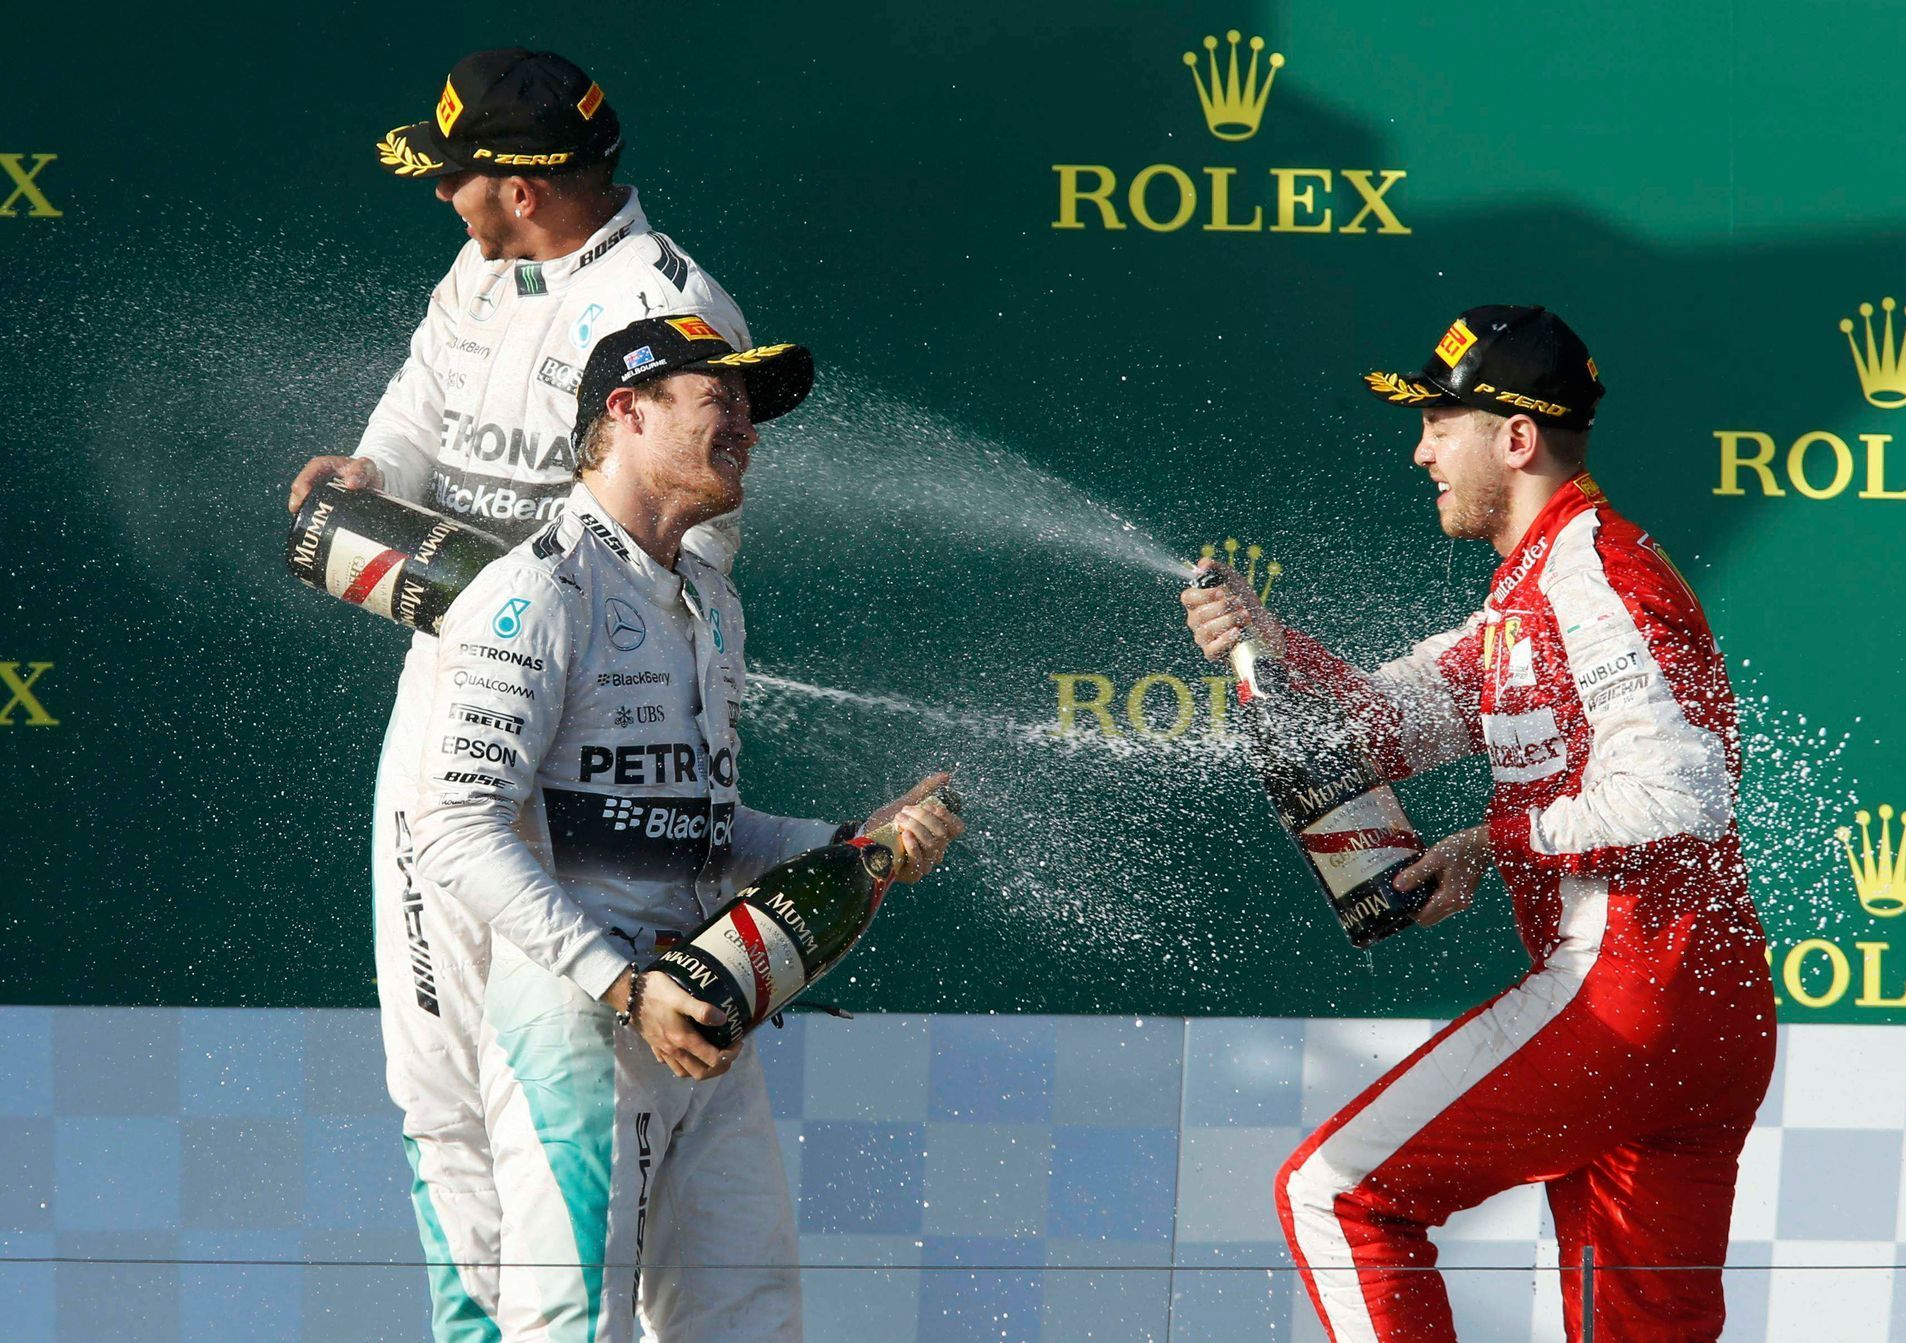 Second placed Mercedes Formula One driver Rosberg sprays champagne at compatriot Ferrari driver Vettel on the podium after the Australian F1 Grand Prix in Melbourne